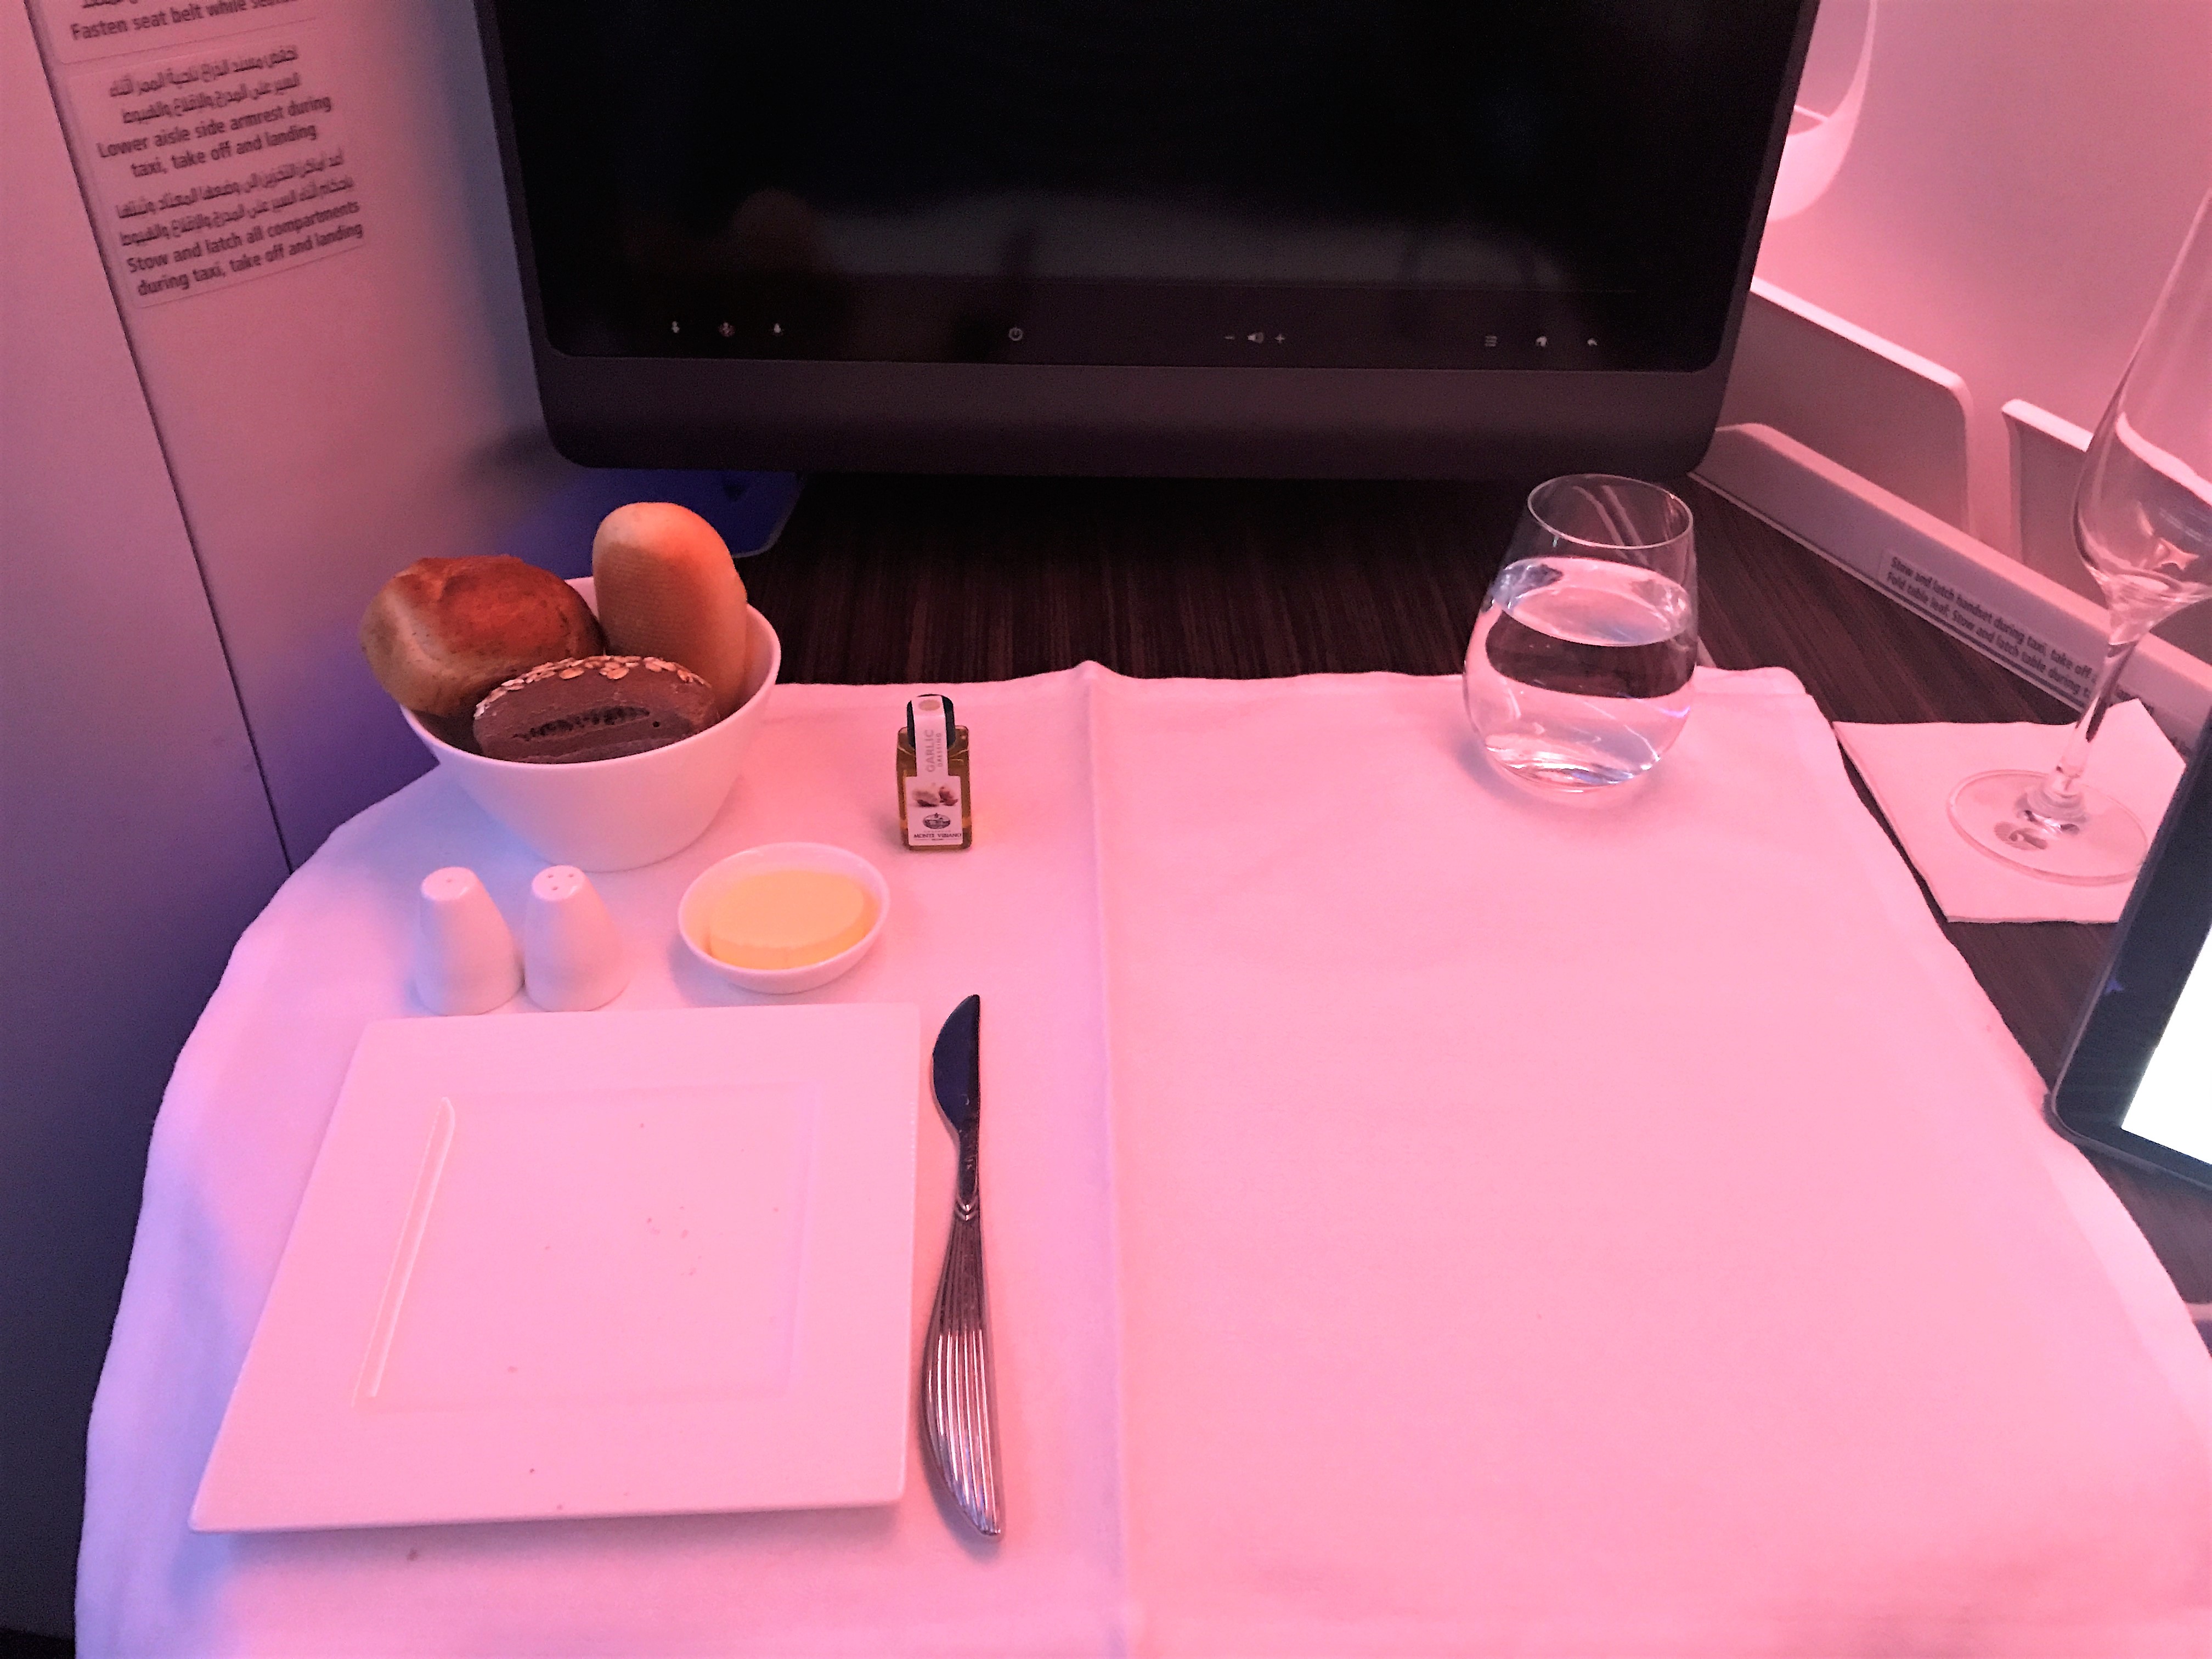 Qatar Airways A380 business class review